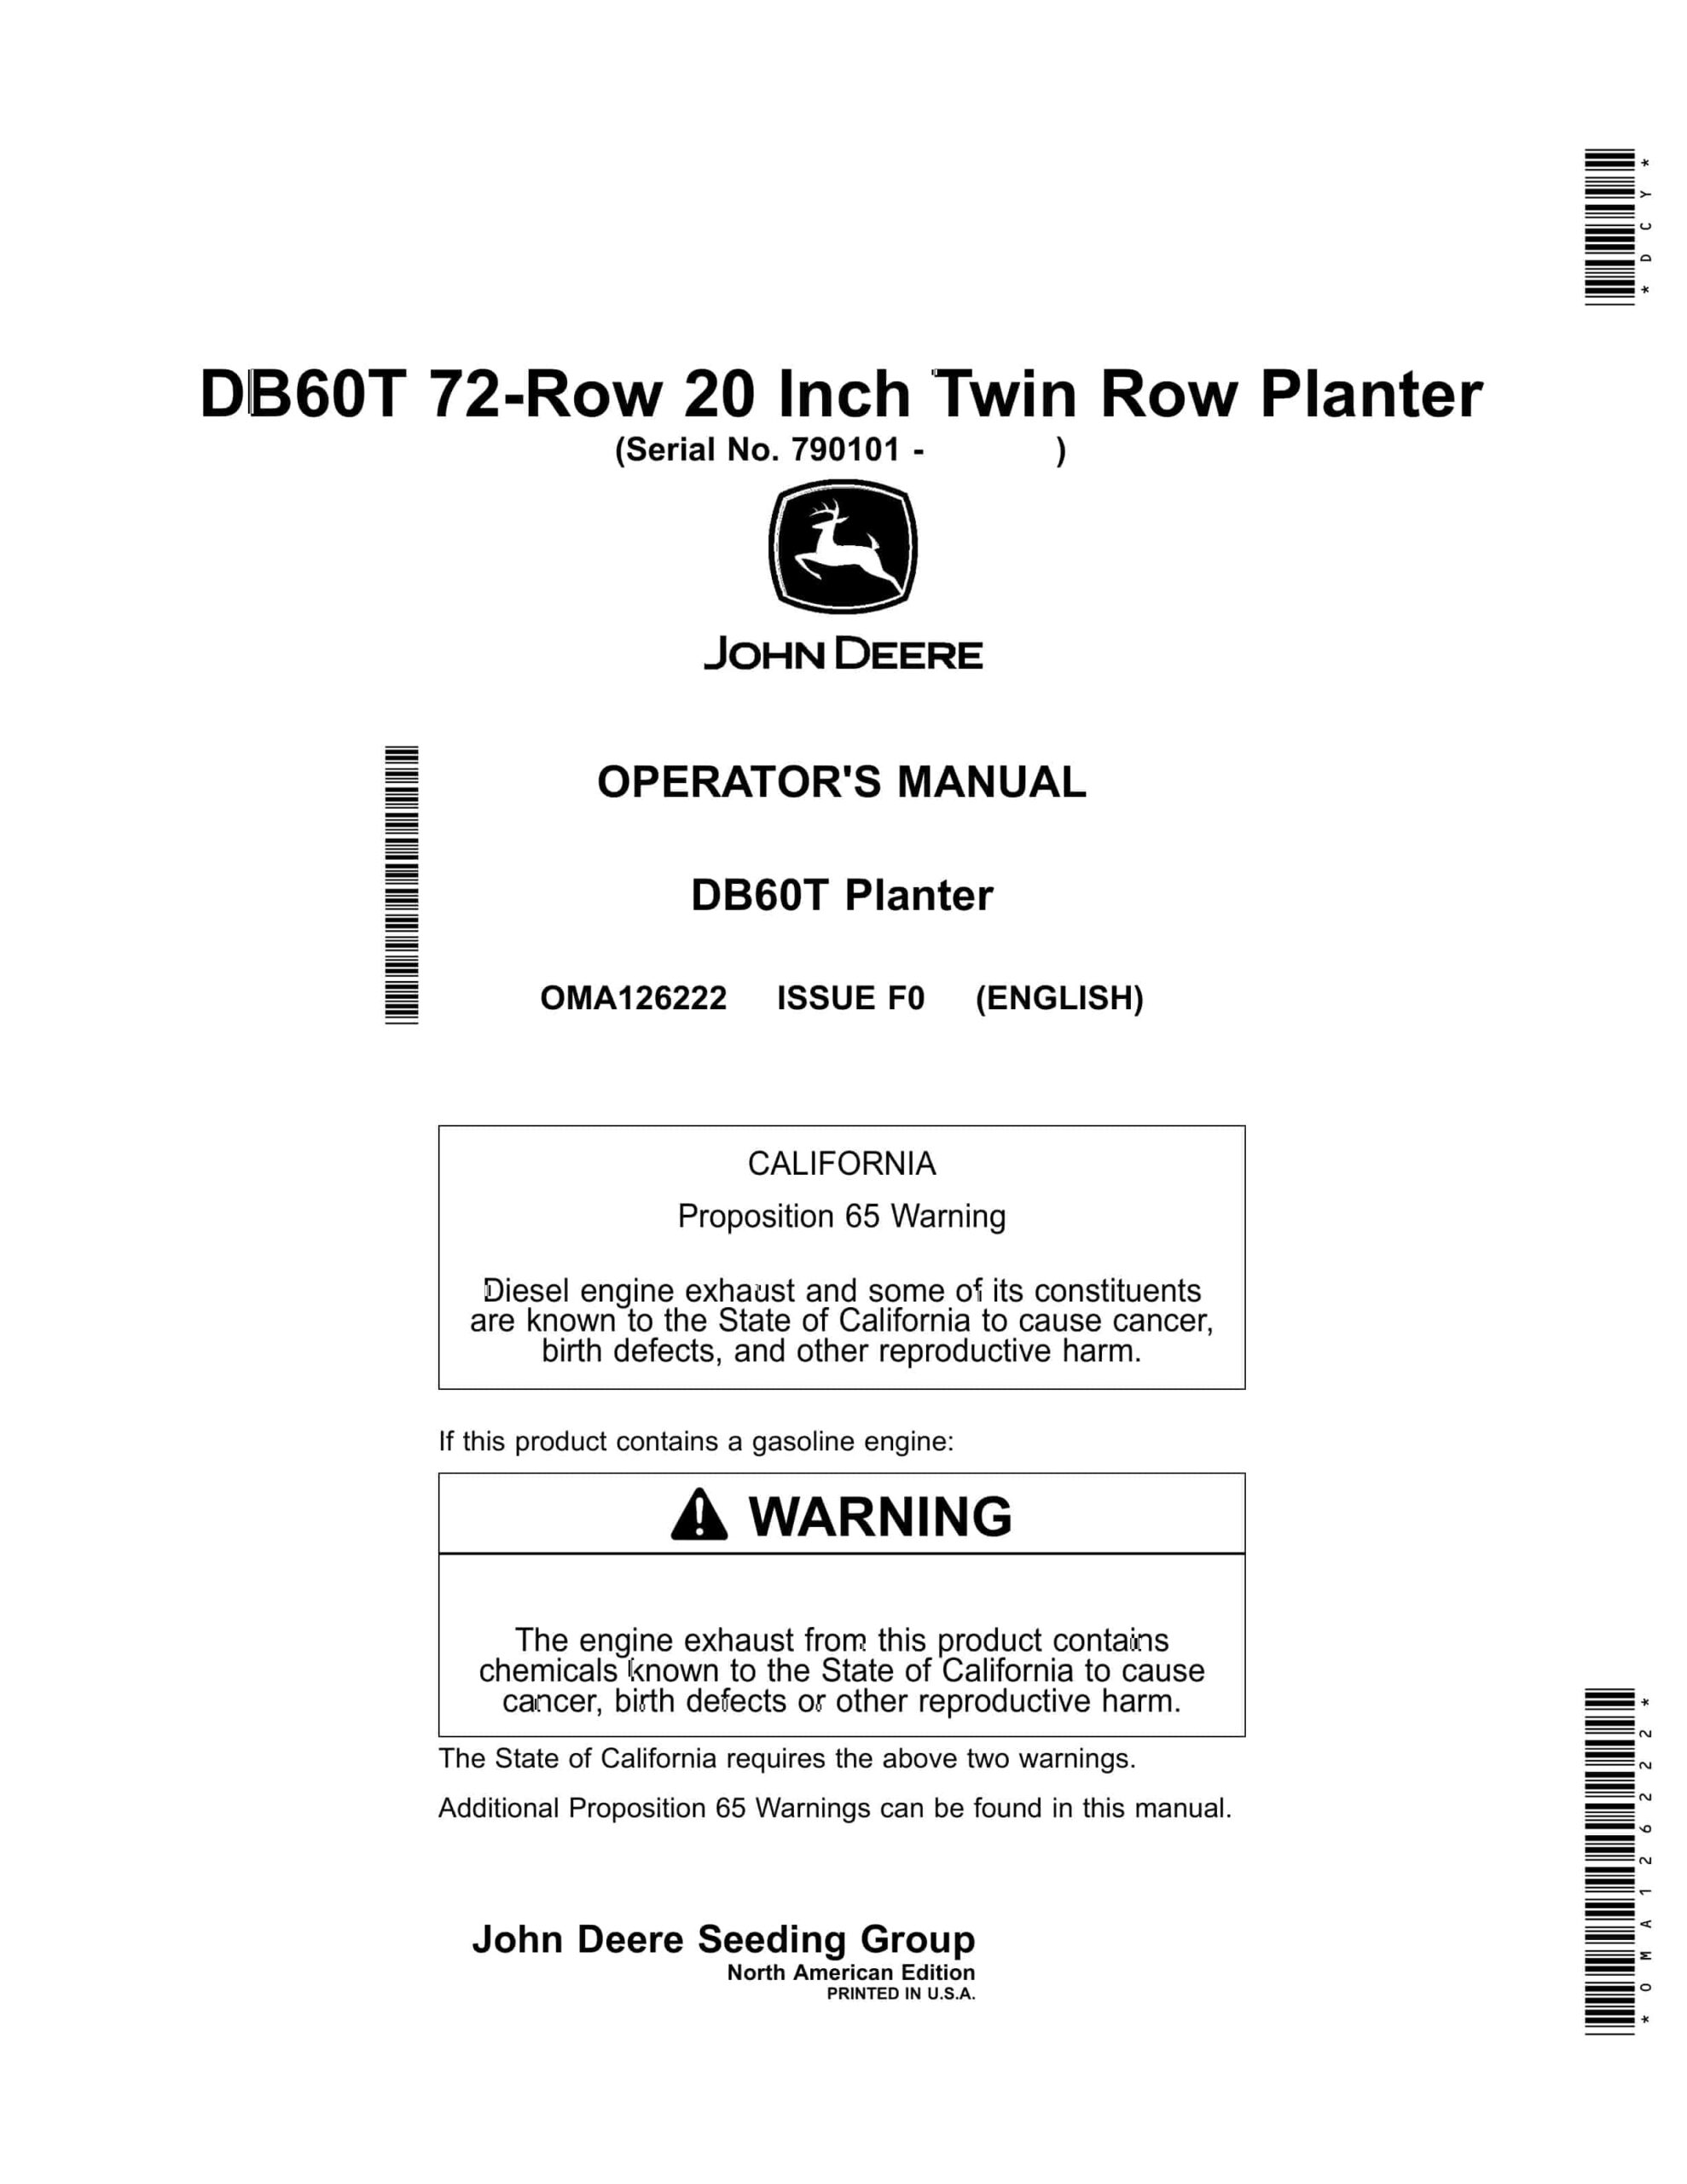 John Deere DB60T 72-Row 20 Inch Twin Row Planter Operator Manual OMA126222-1